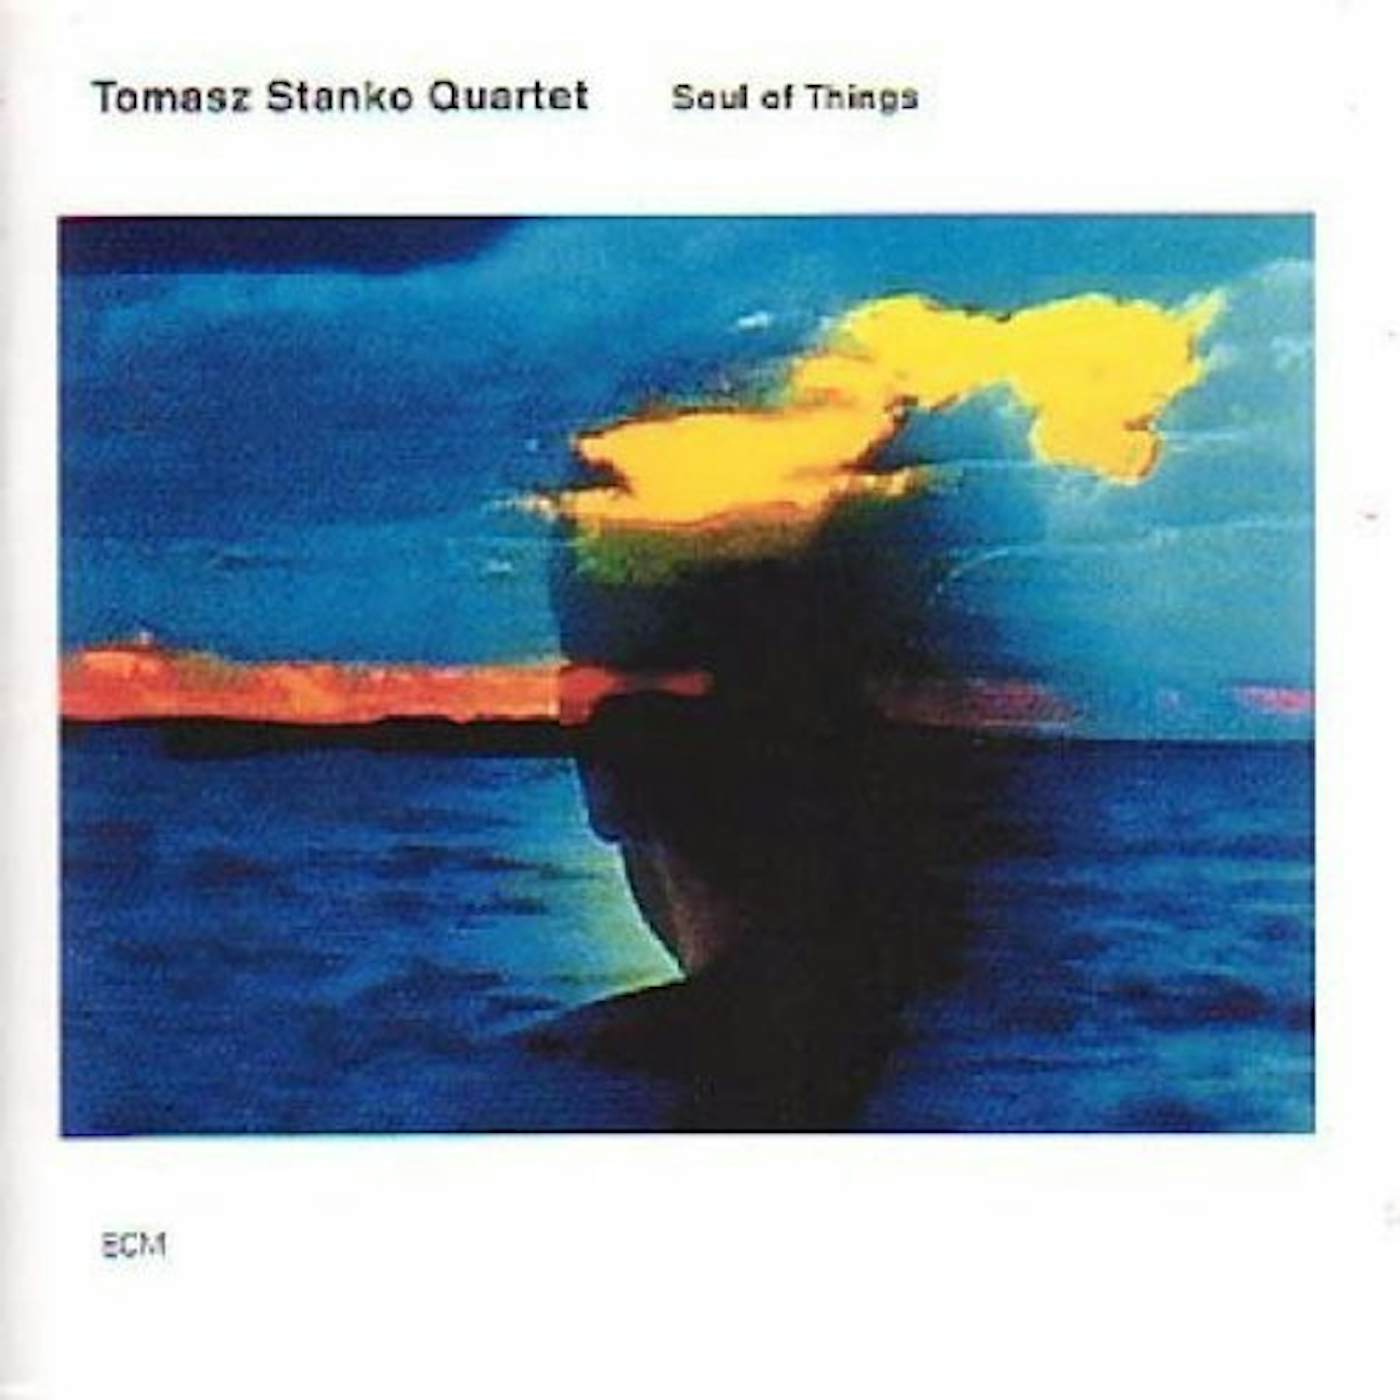 Tomasz Stańko SOUL OF THINGS CD